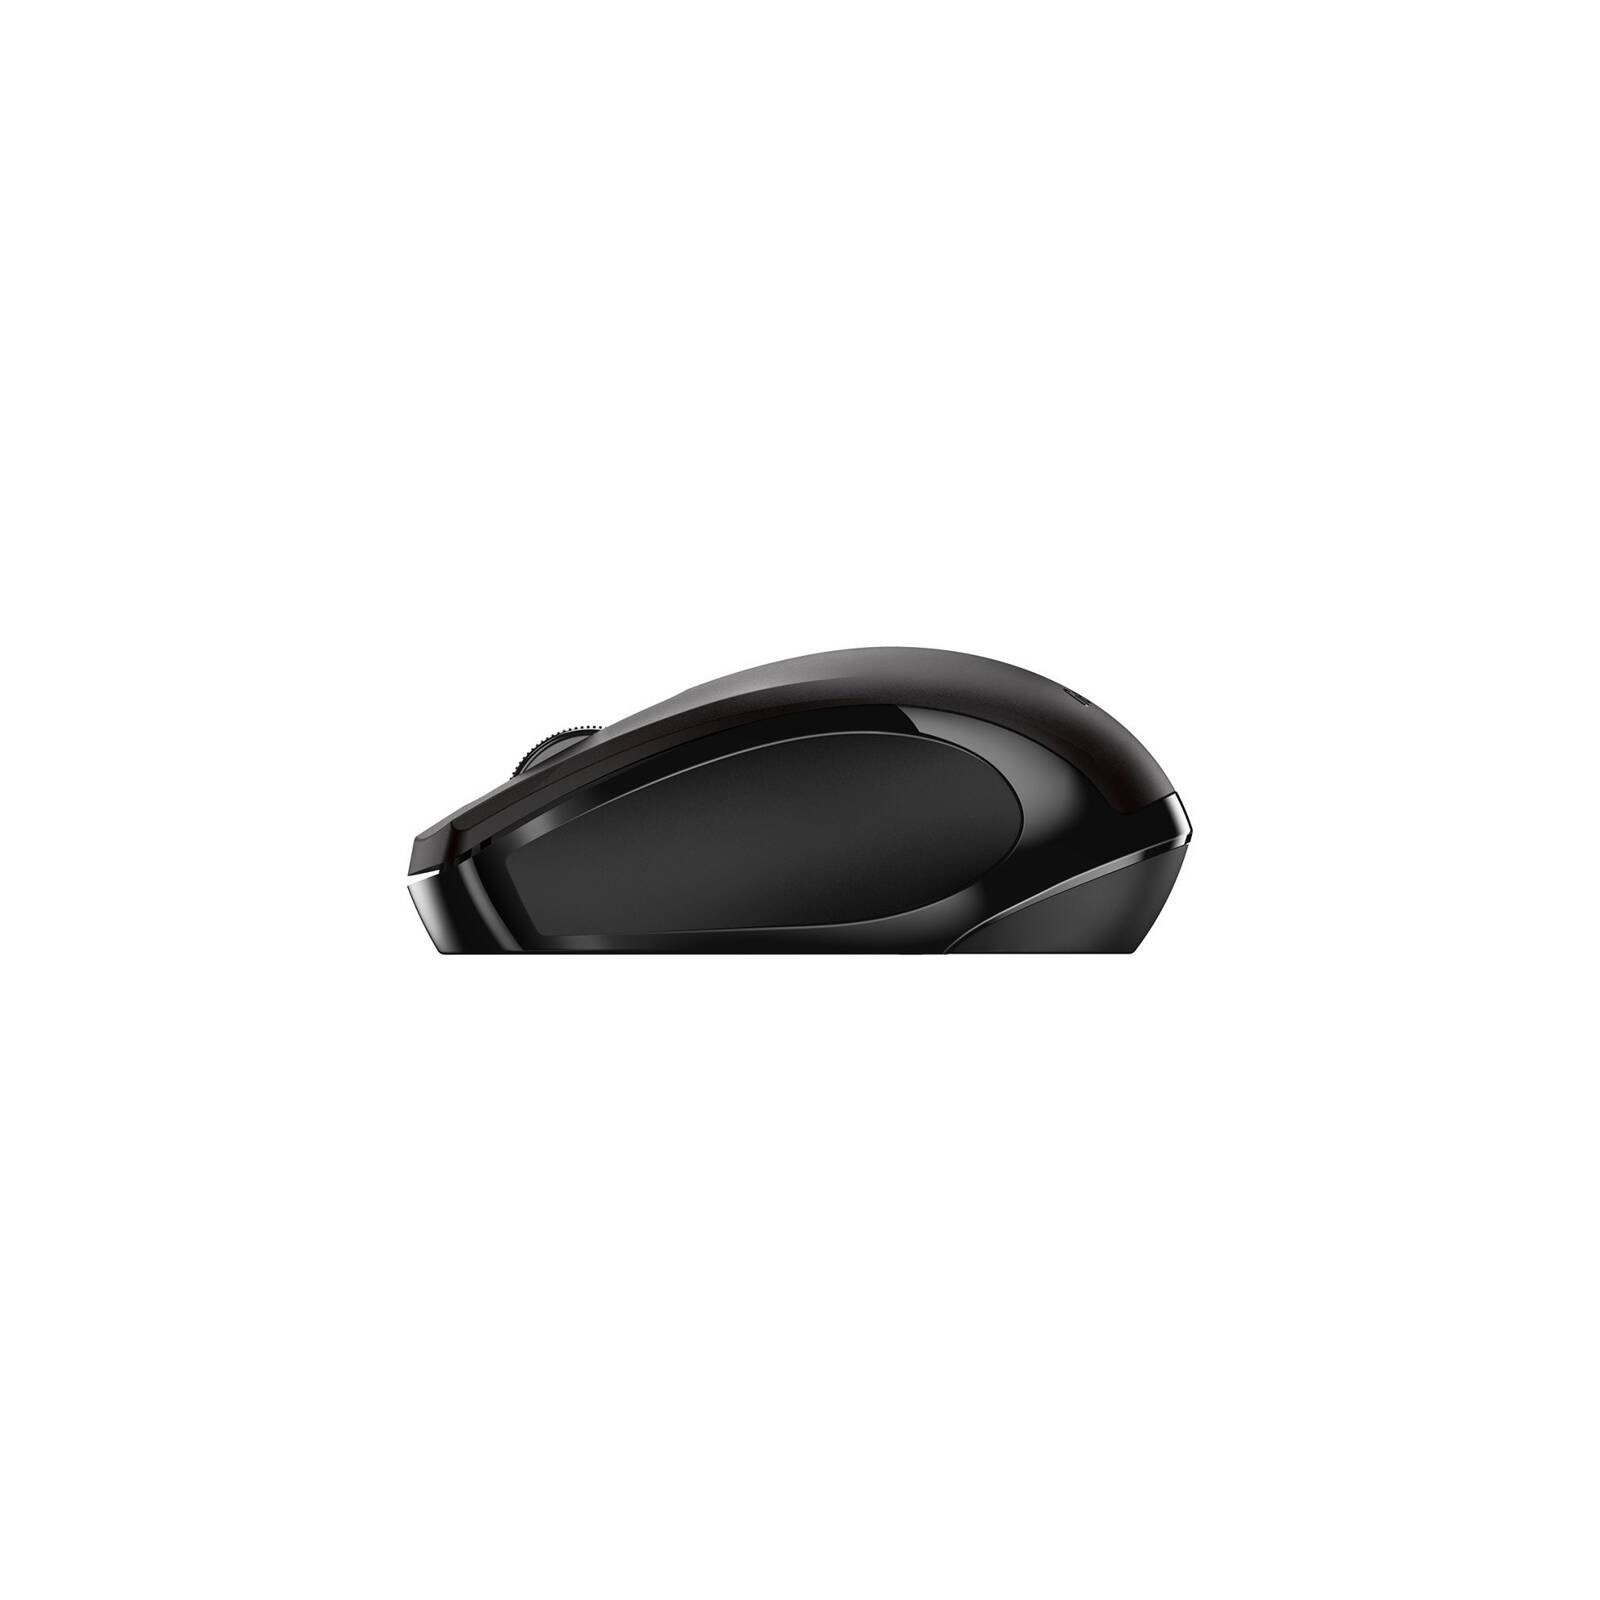 Мышка Genius NX-8006 Silent Wireless Black (31030024400) изображение 4